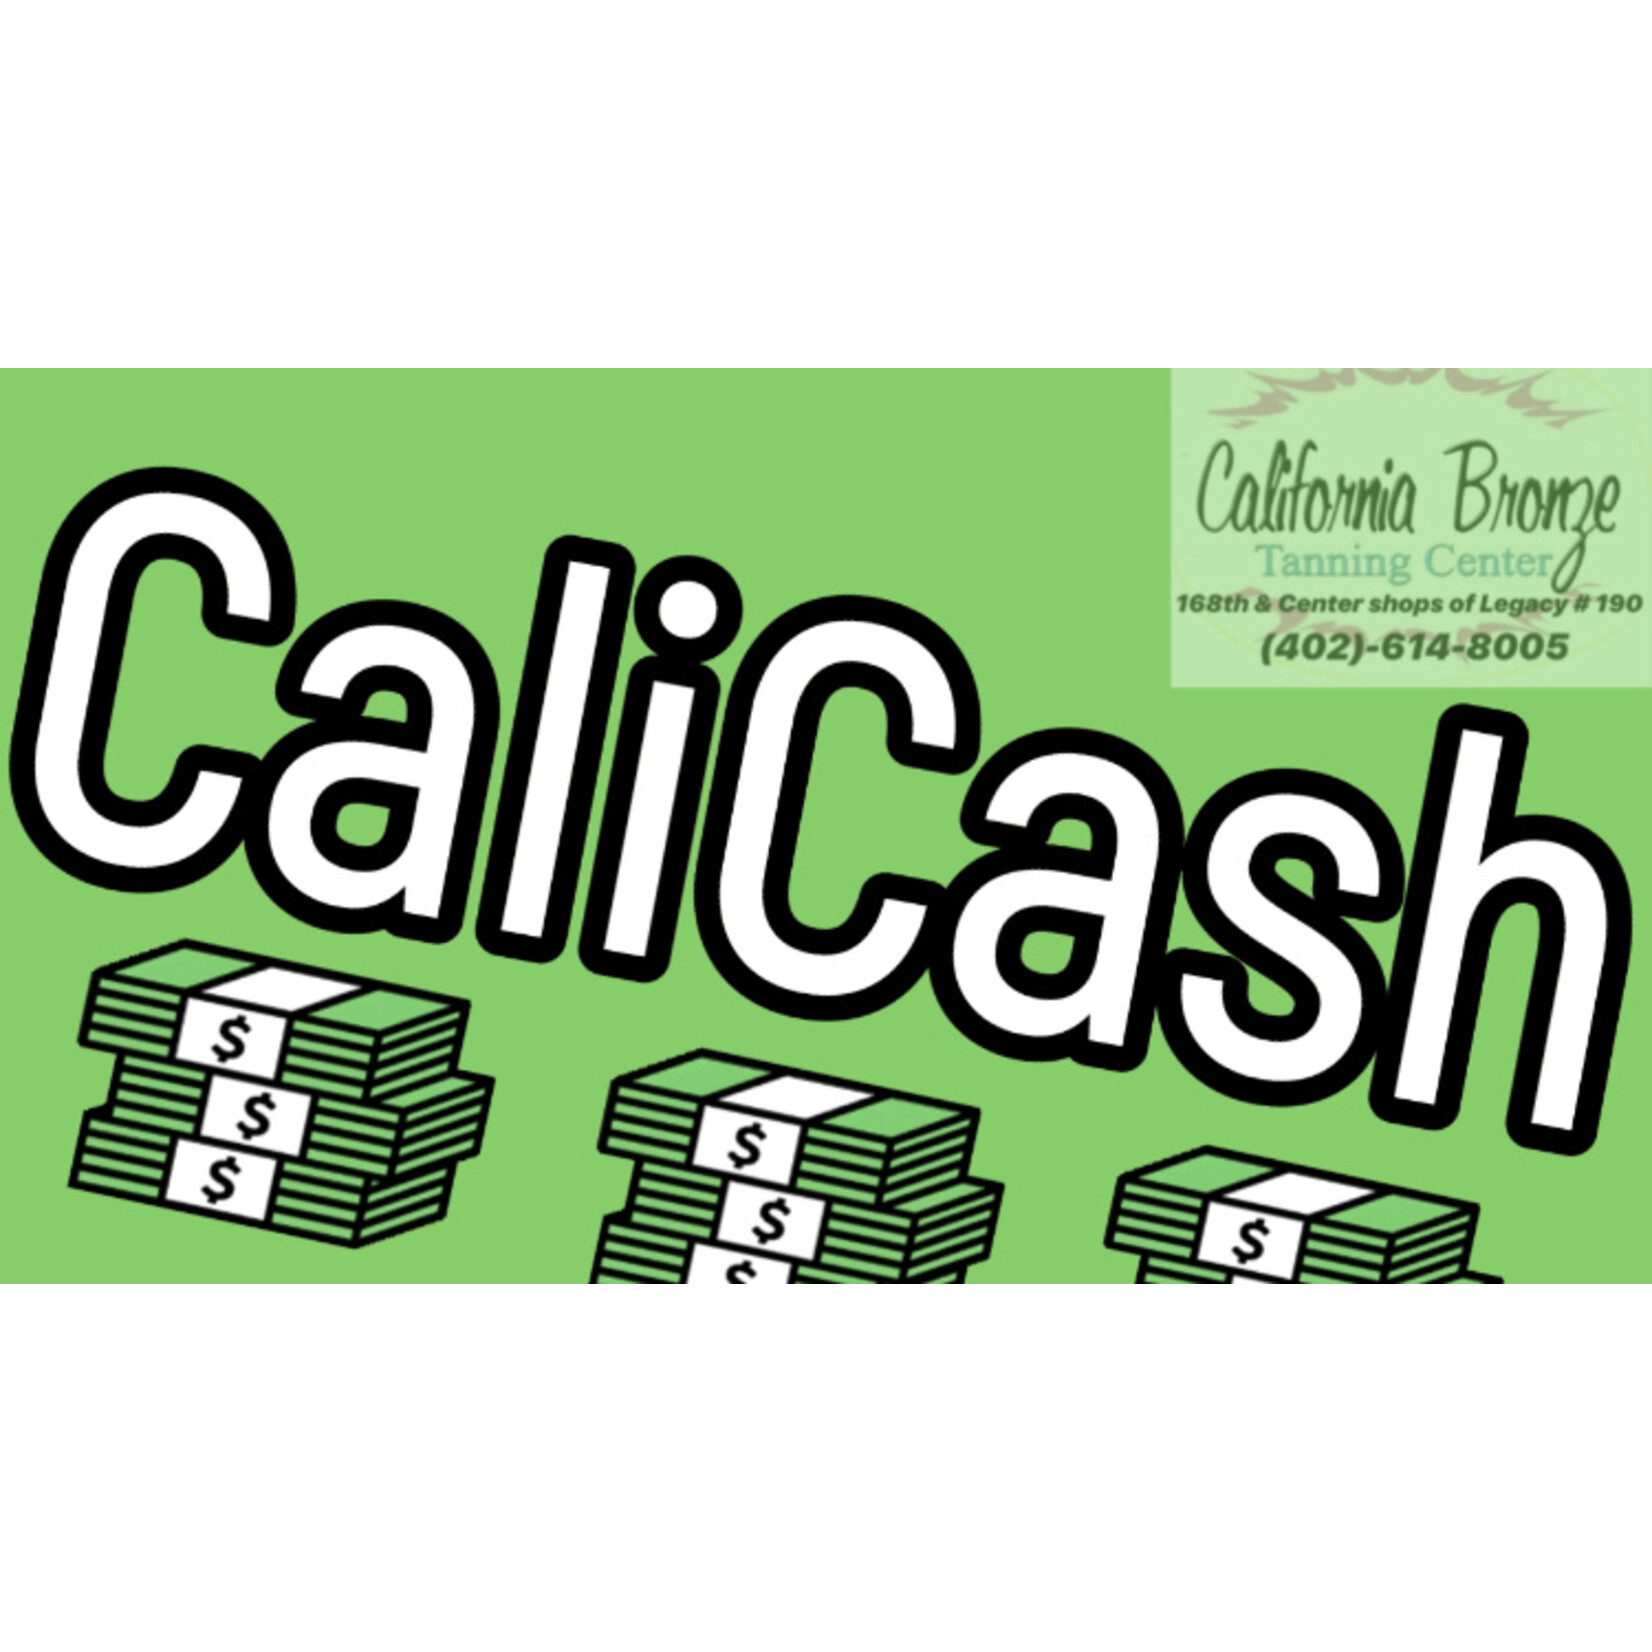 CALIFORNIA BRONZE $5 Cali Cash COUPON CODE: '$5-Off'